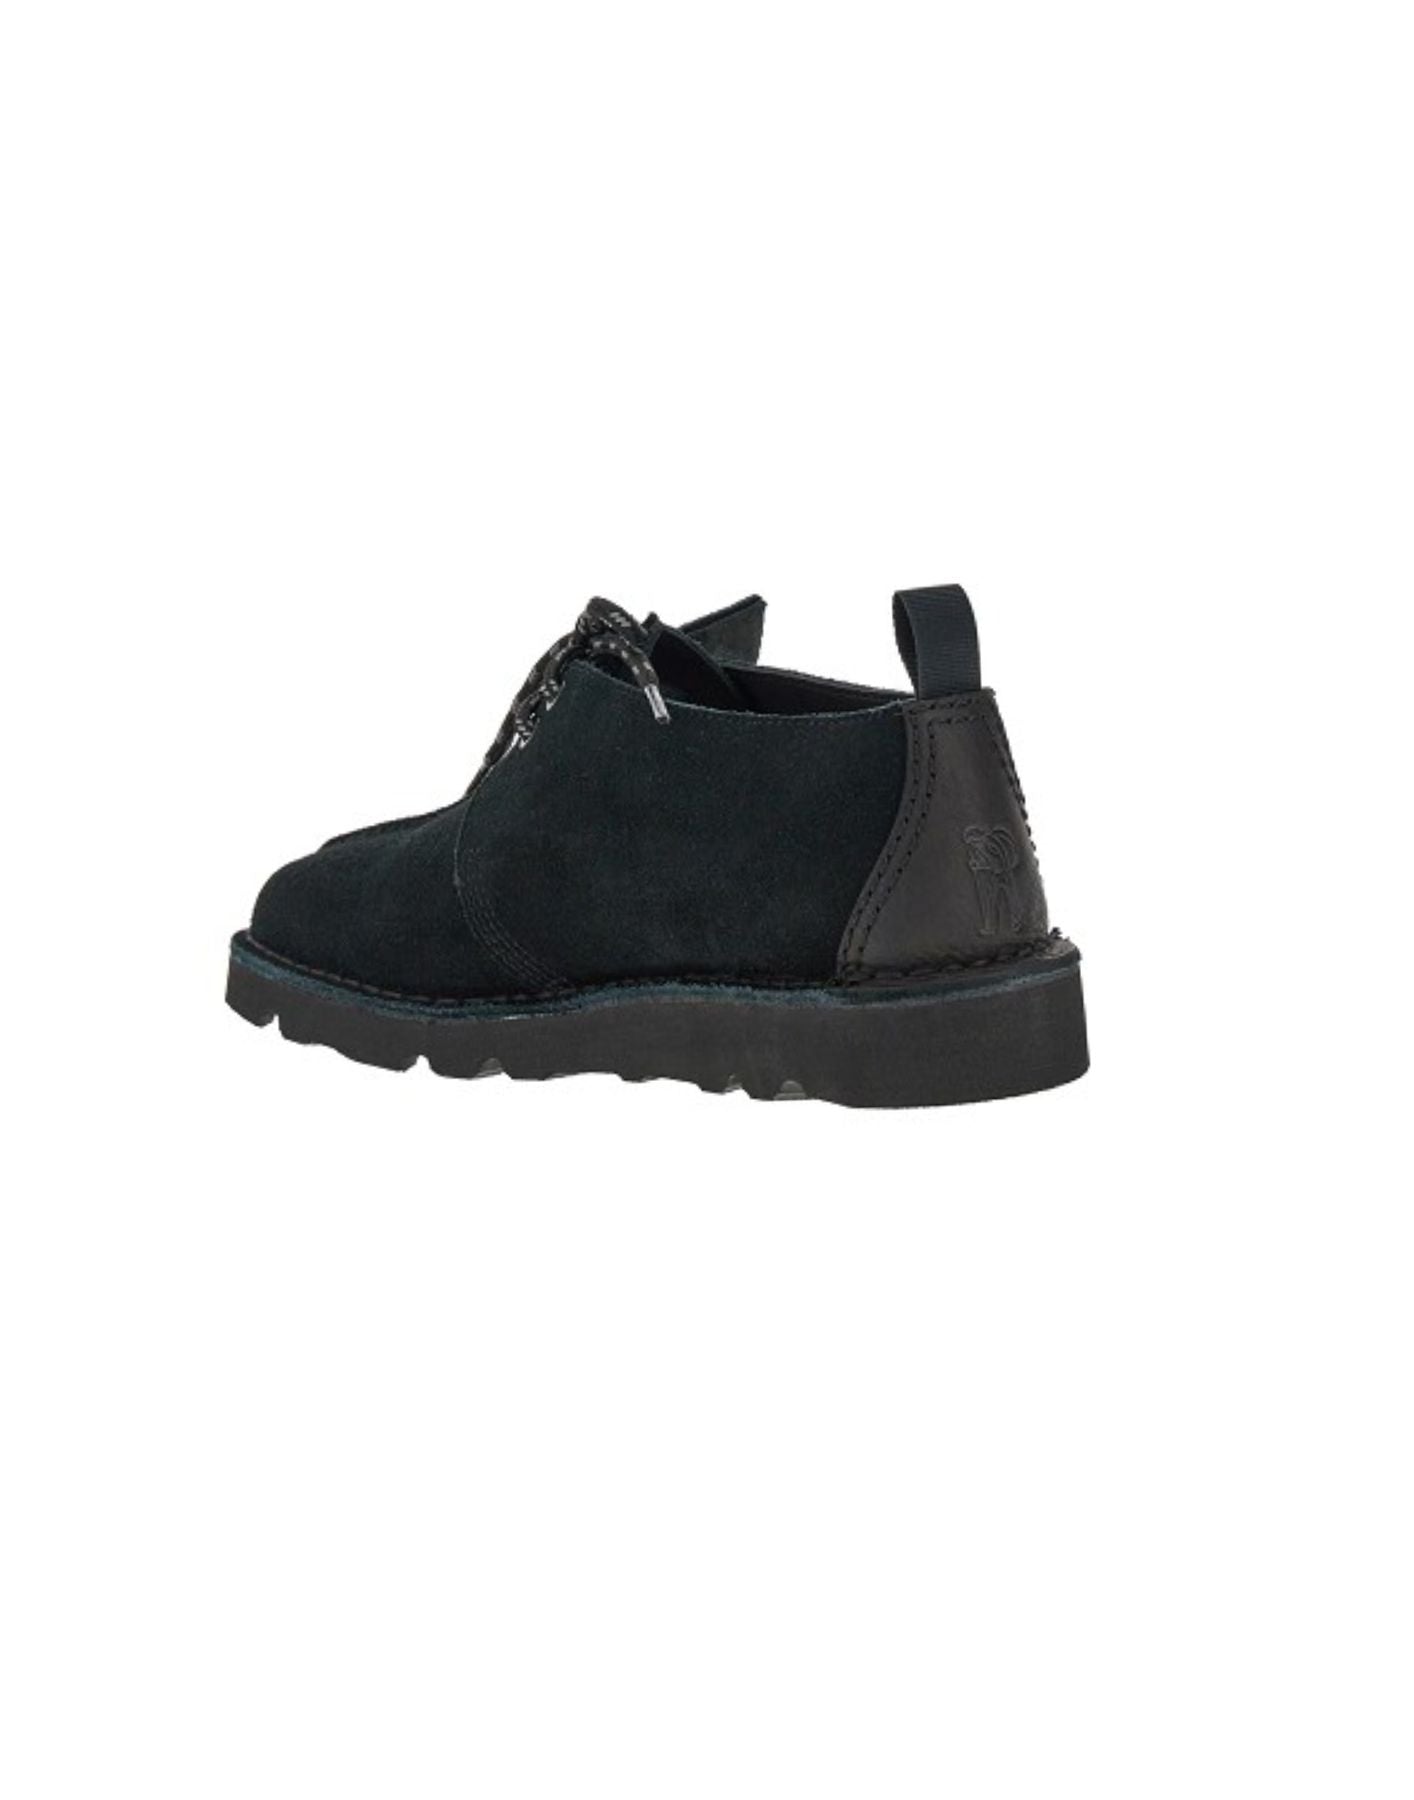 Chaussures pour homme DESERT TREKGTX BLACK SDE Clarks Originals